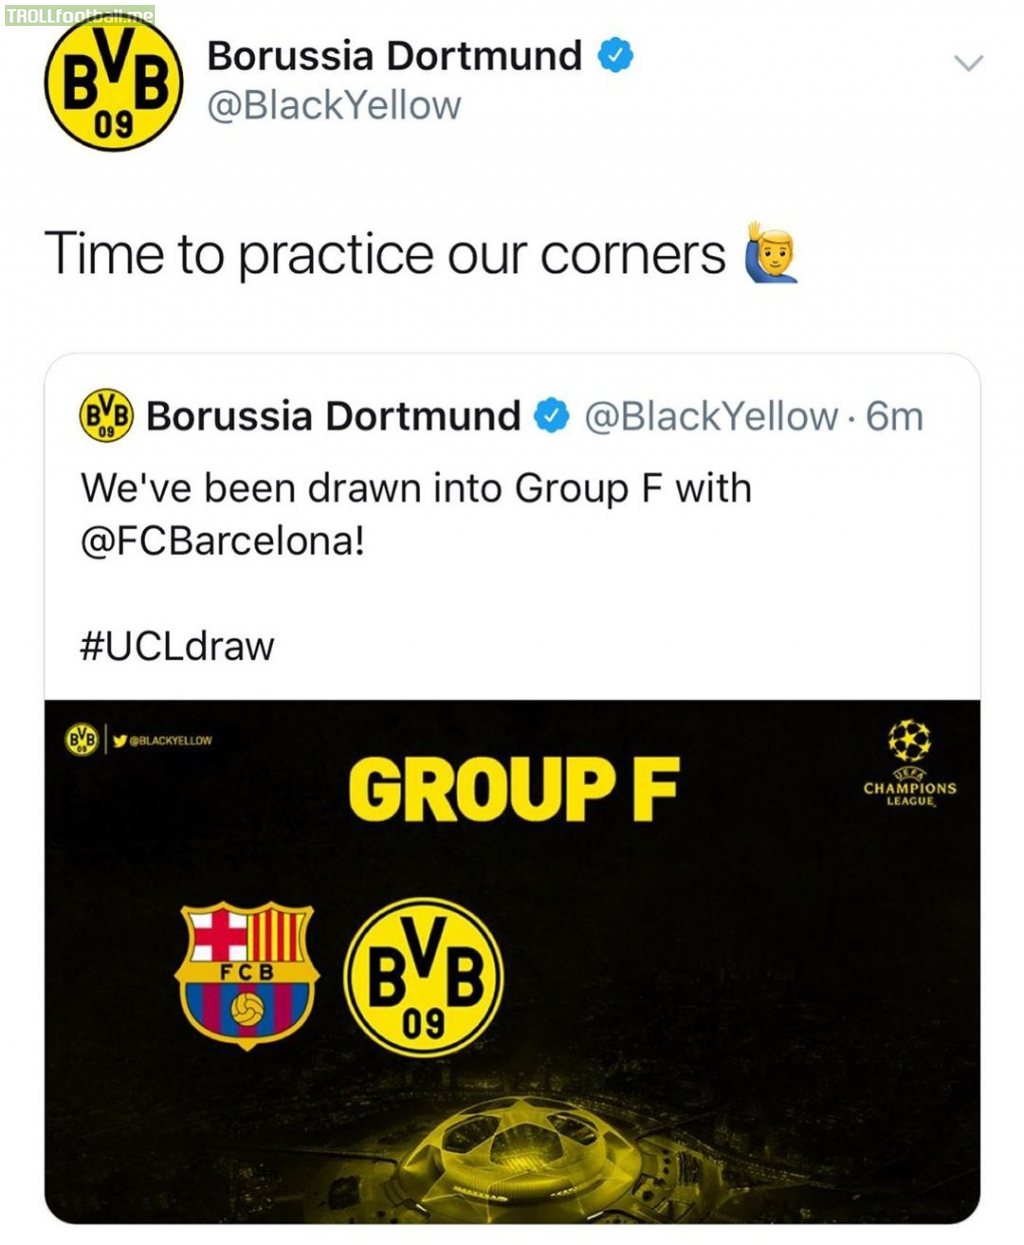 Borussia dortmund's tweet after drawing Barcelona